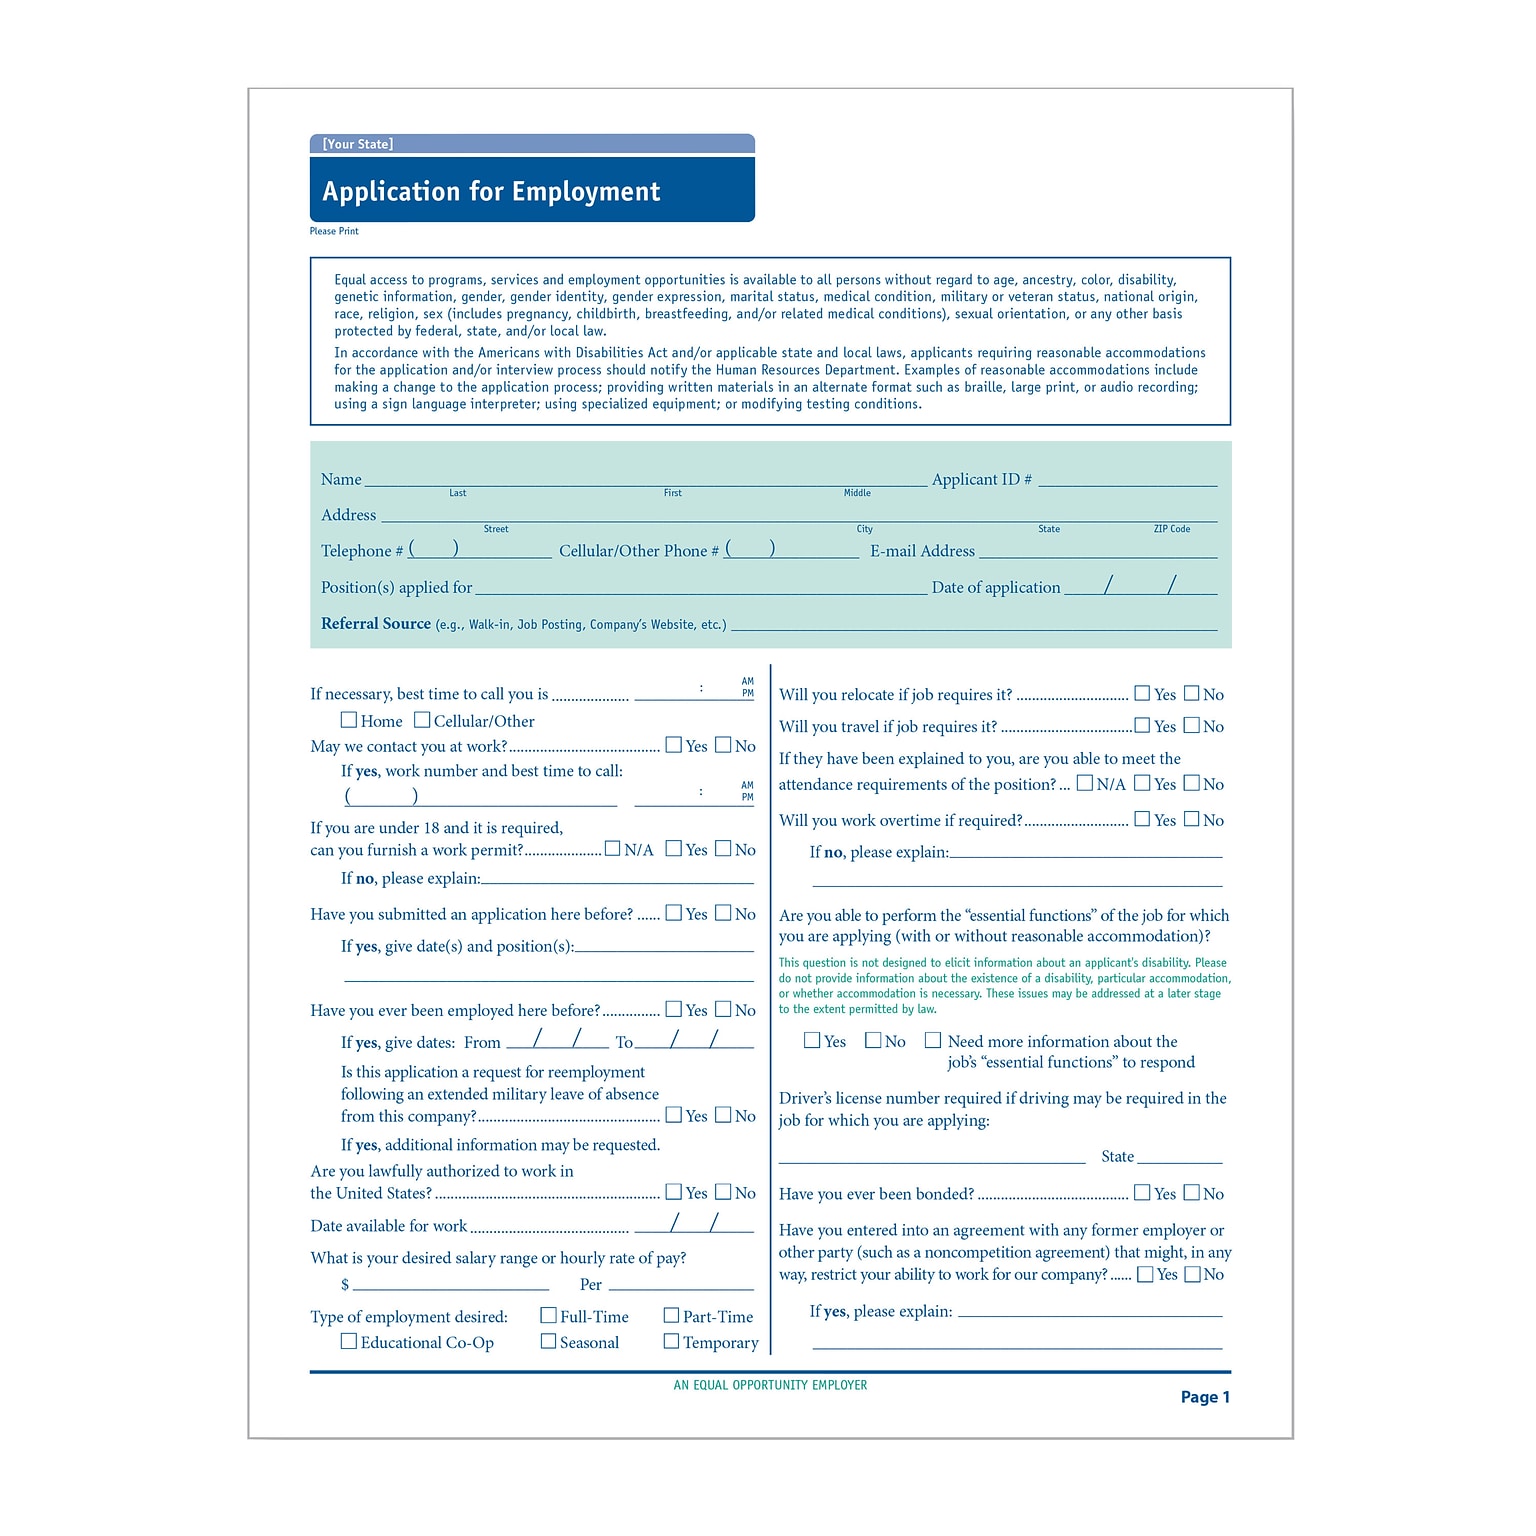 ComplyRight South Carolina Job Application, Pack of 50 (A2179SC)